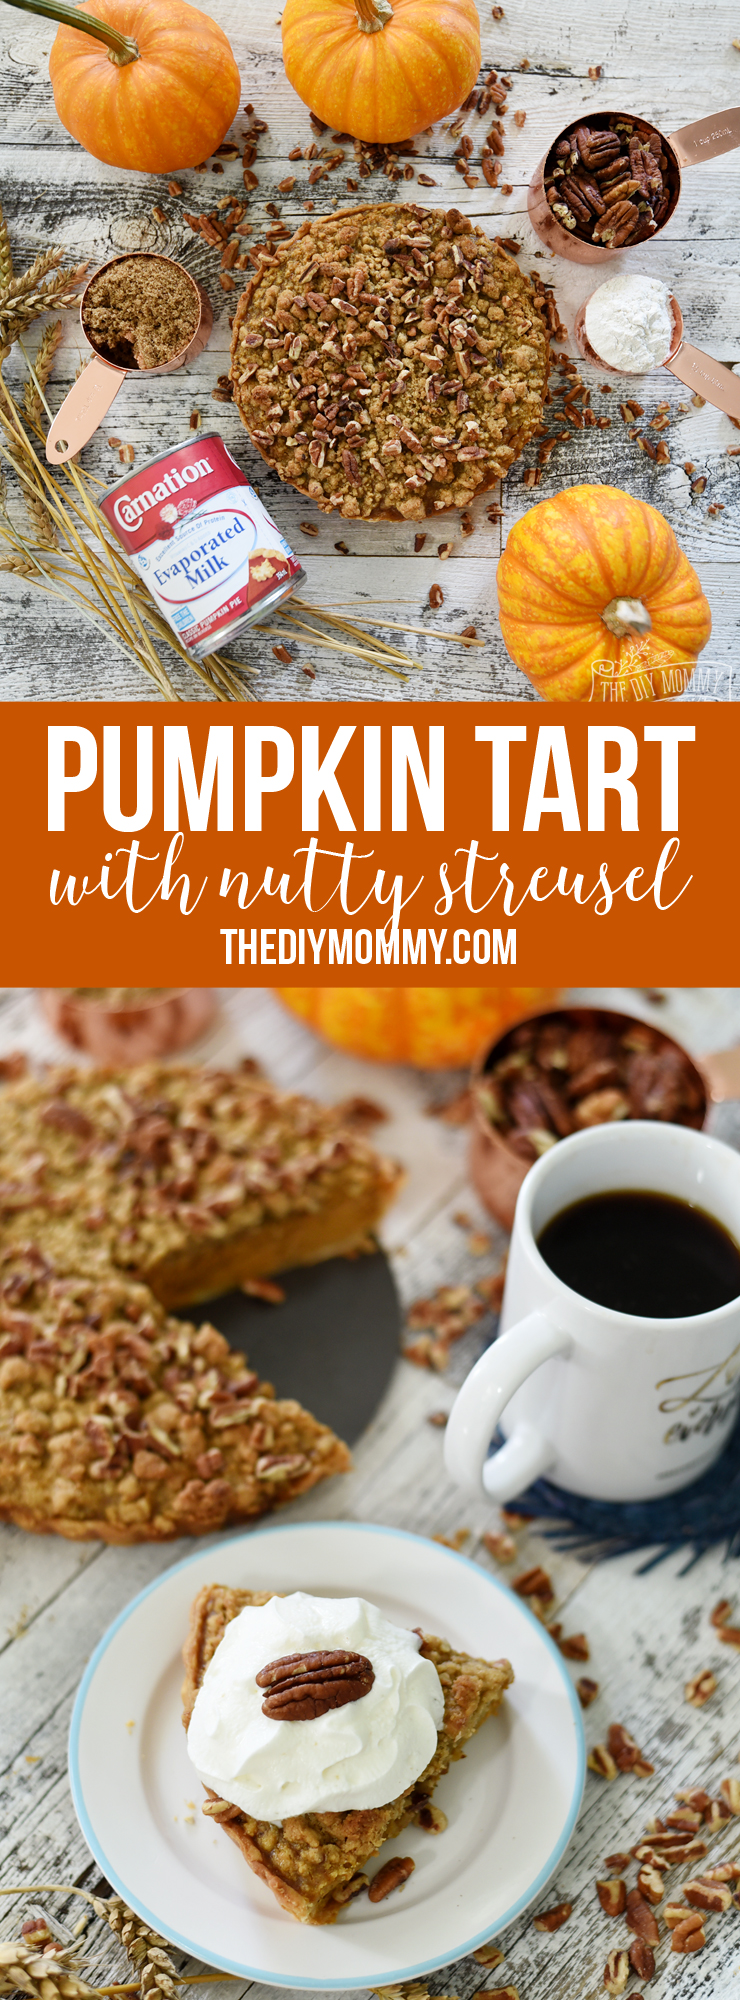 Pumpkin Tart with Pecan Nutty Streusel Recipe